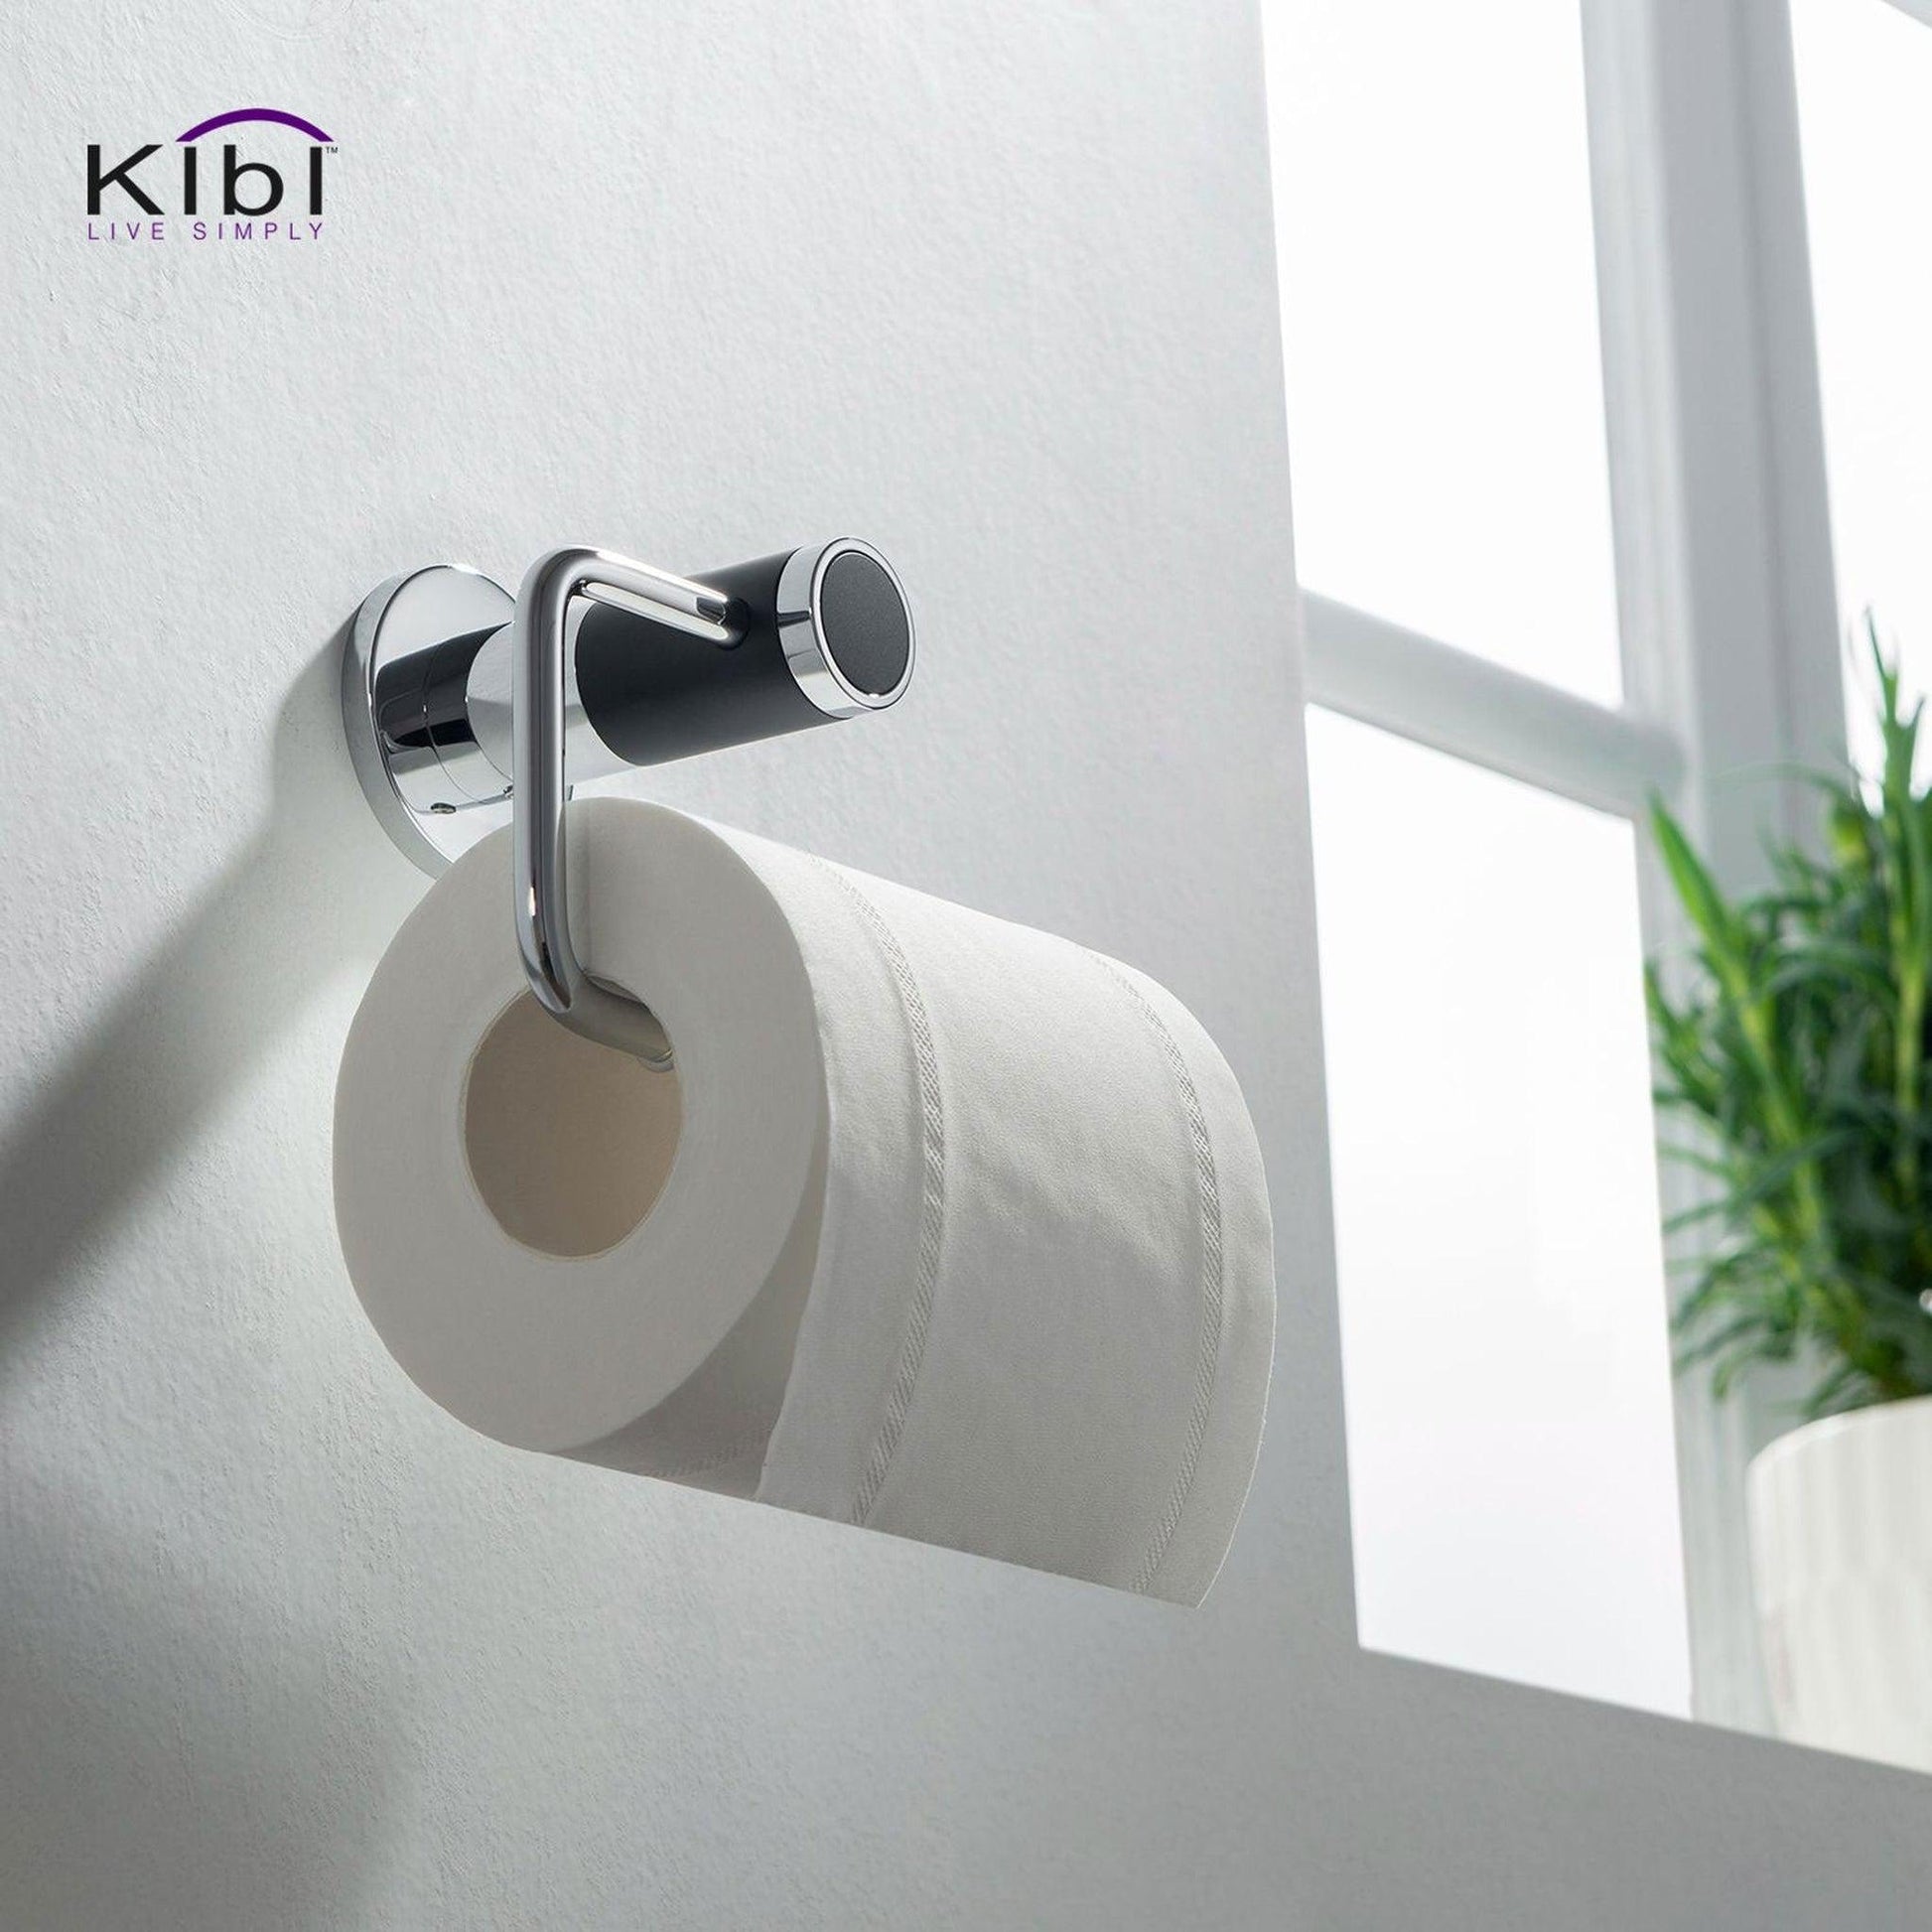 KIBI Abaco Bathroom Tissue Holder in Chrome Black Finish